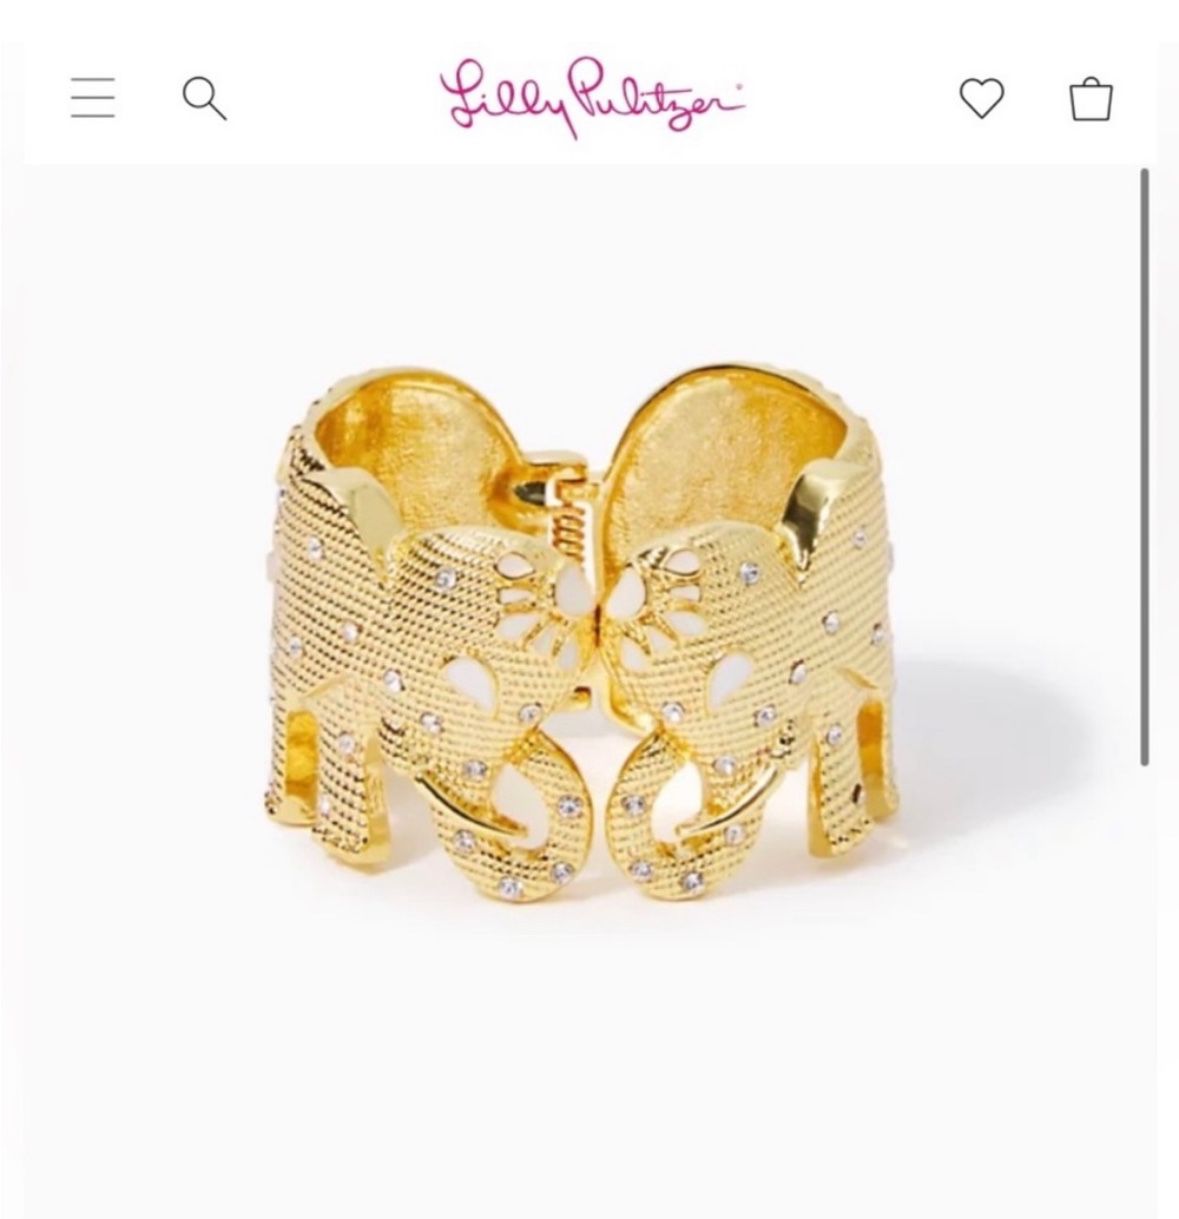 Lilly Pulitzer Cuff Bracelet Golden Elephant Women’s Jewelry Gold